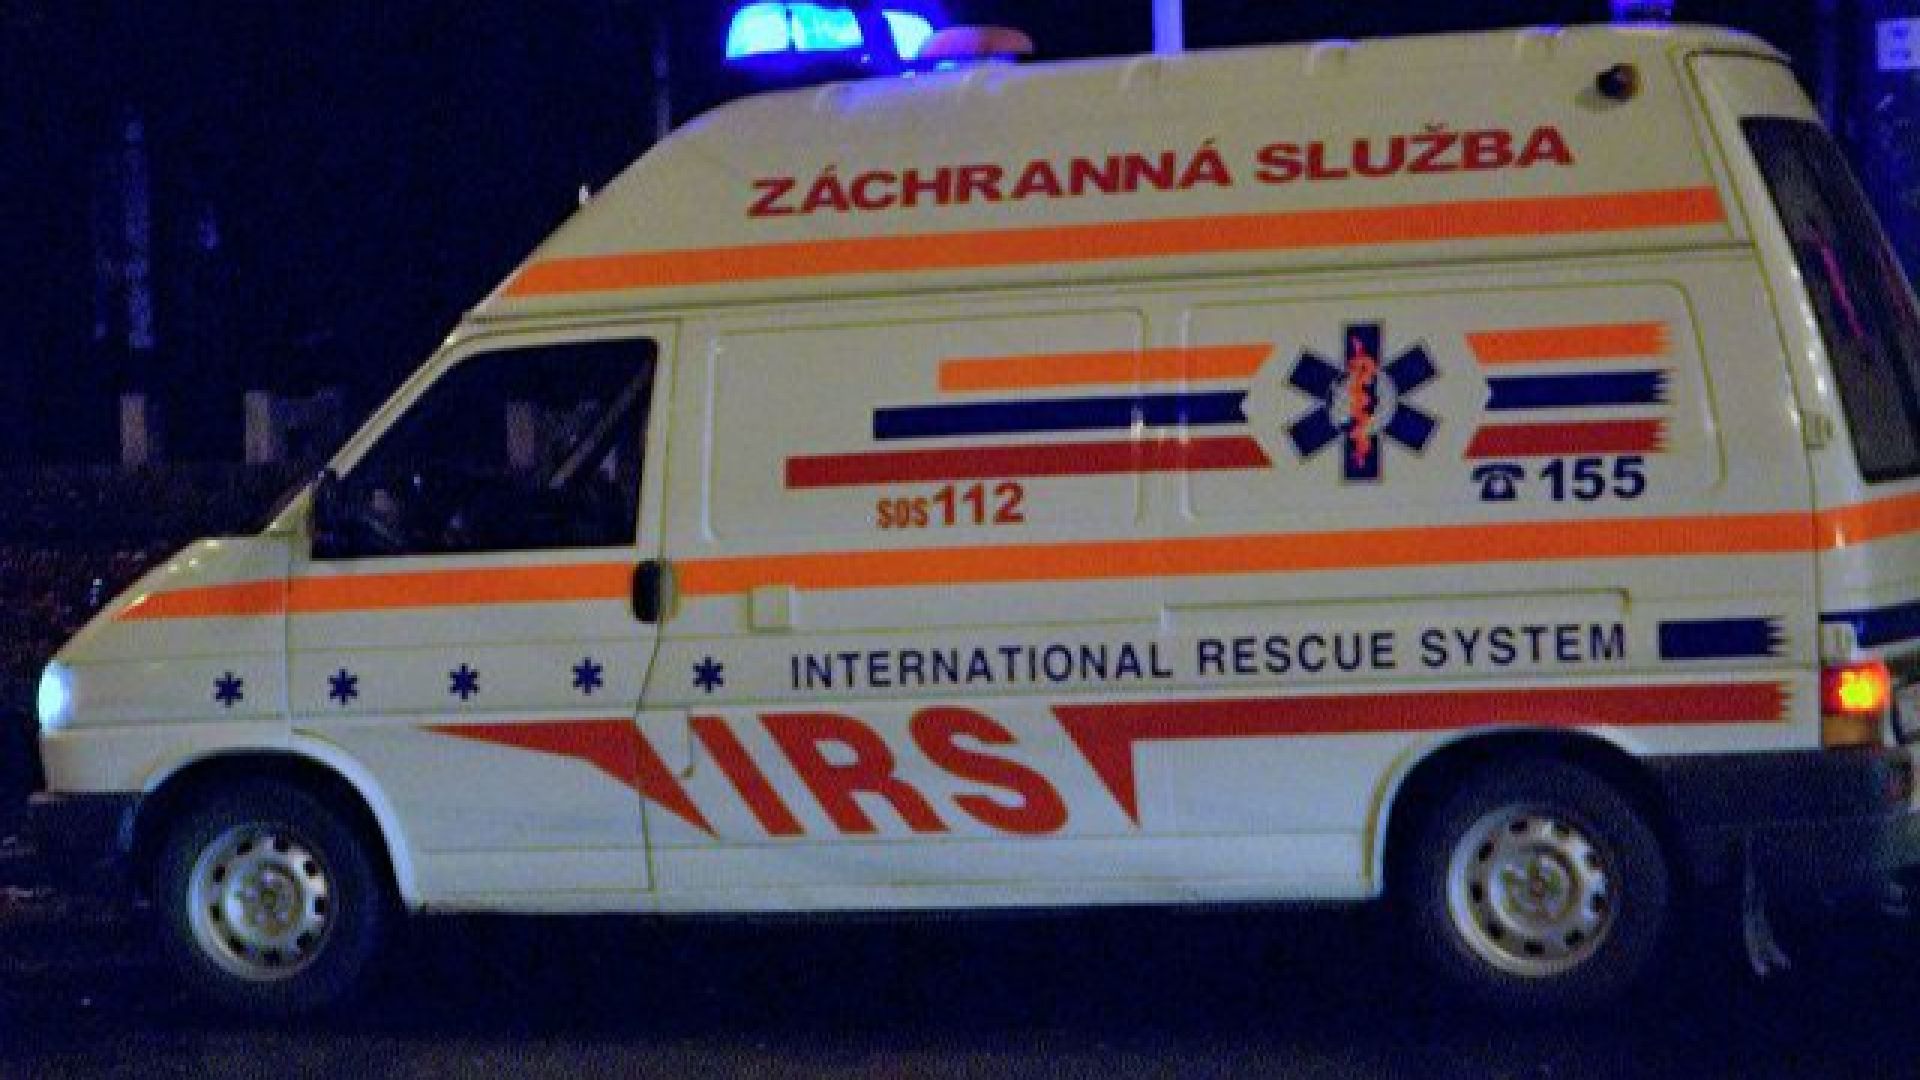 Седем души пострадаха в Северна Словакия при дерайлирането на влак